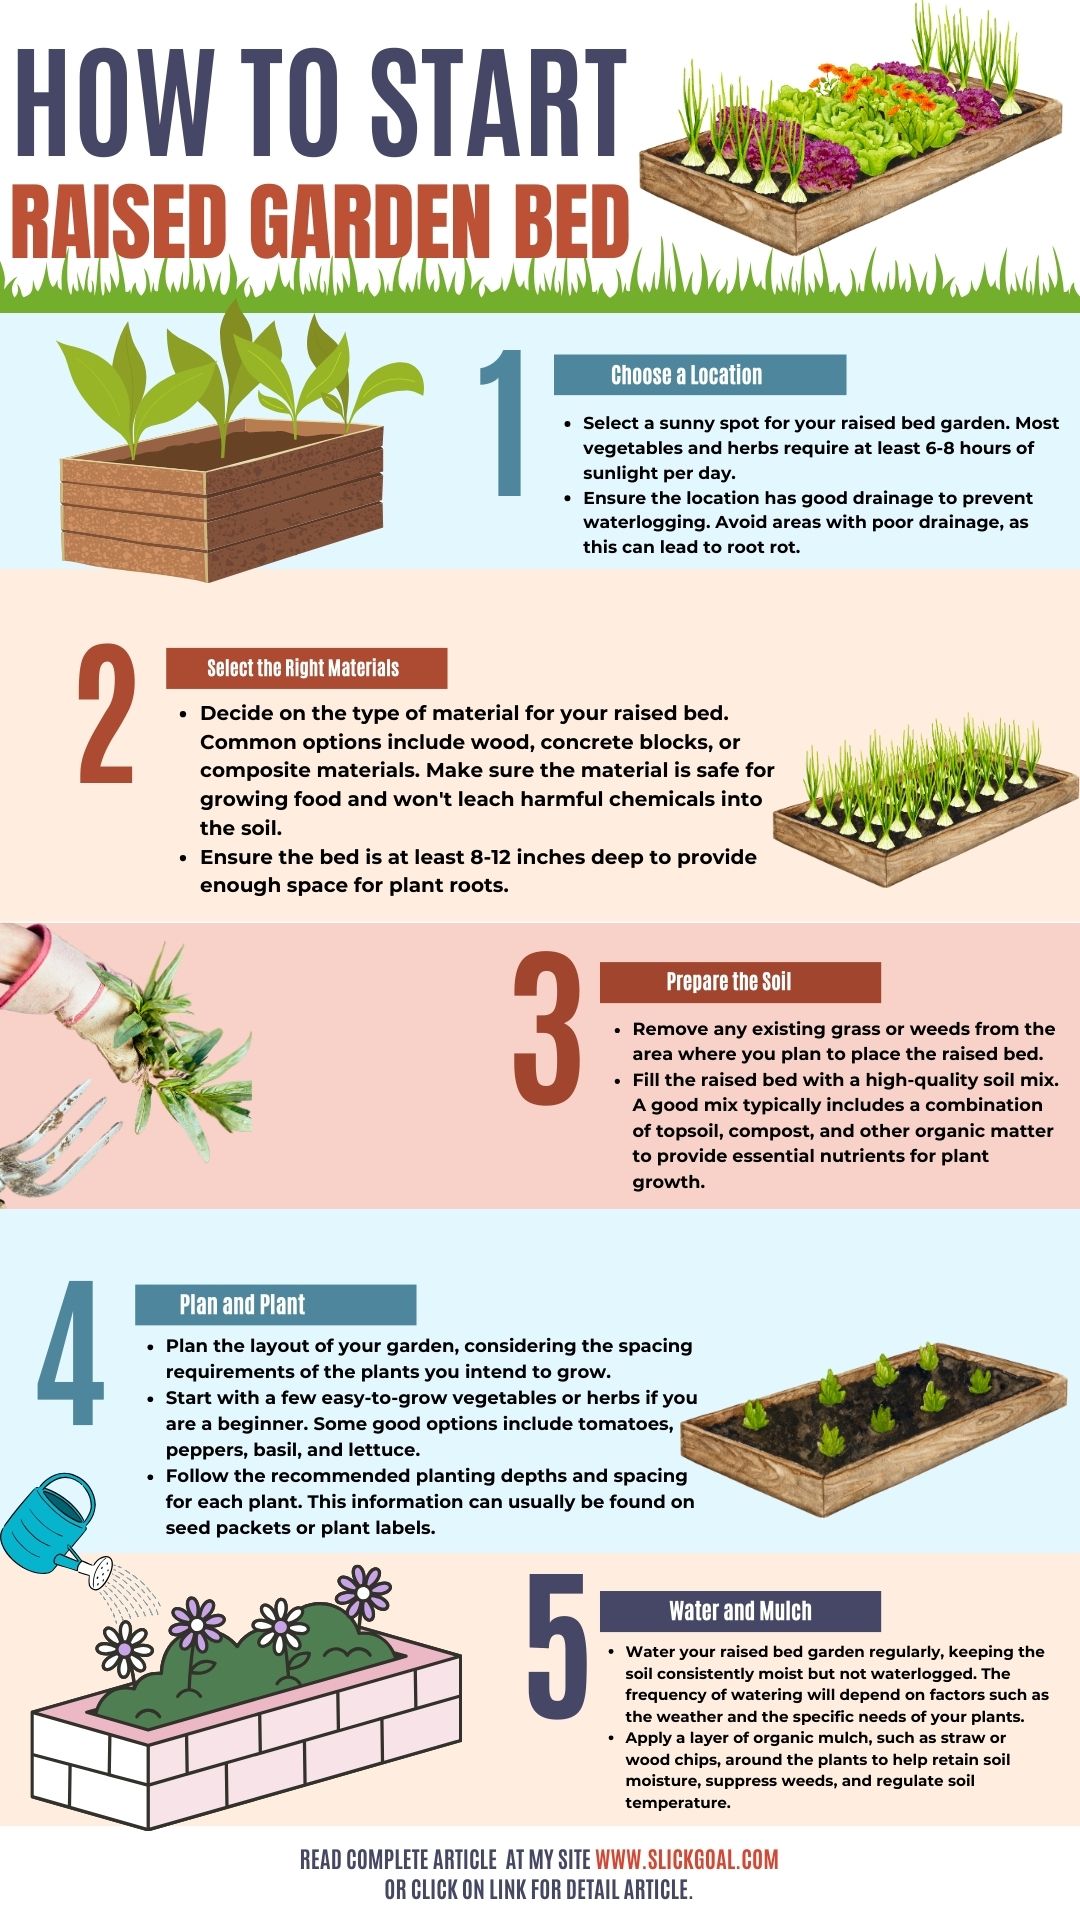 Raised Bed Garden infographic